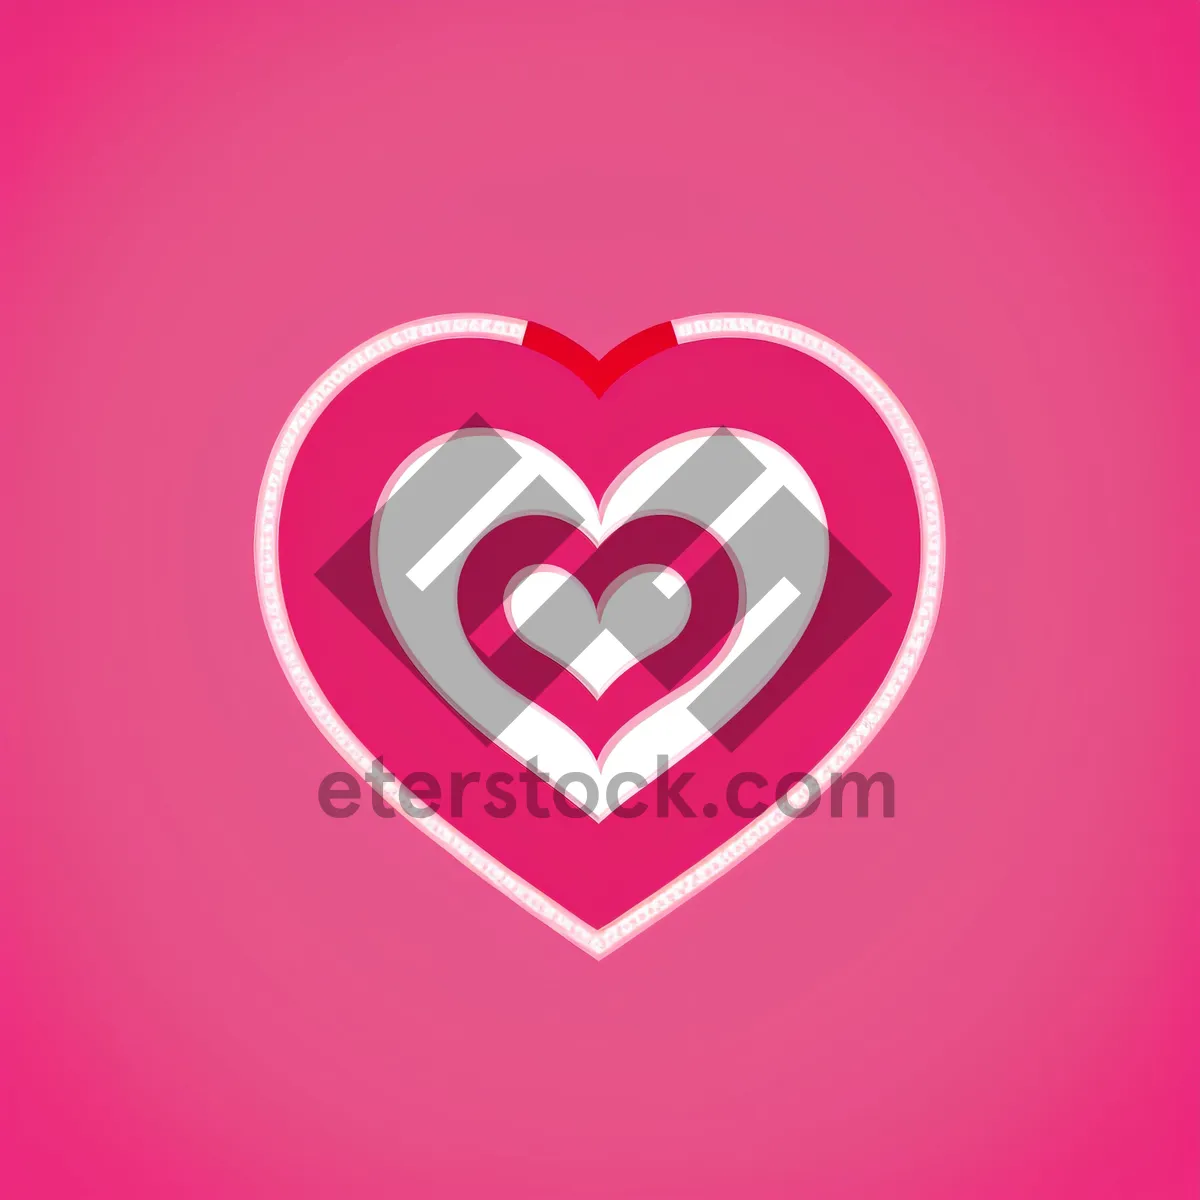 Picture of Romantic Valentine's Day Card Design